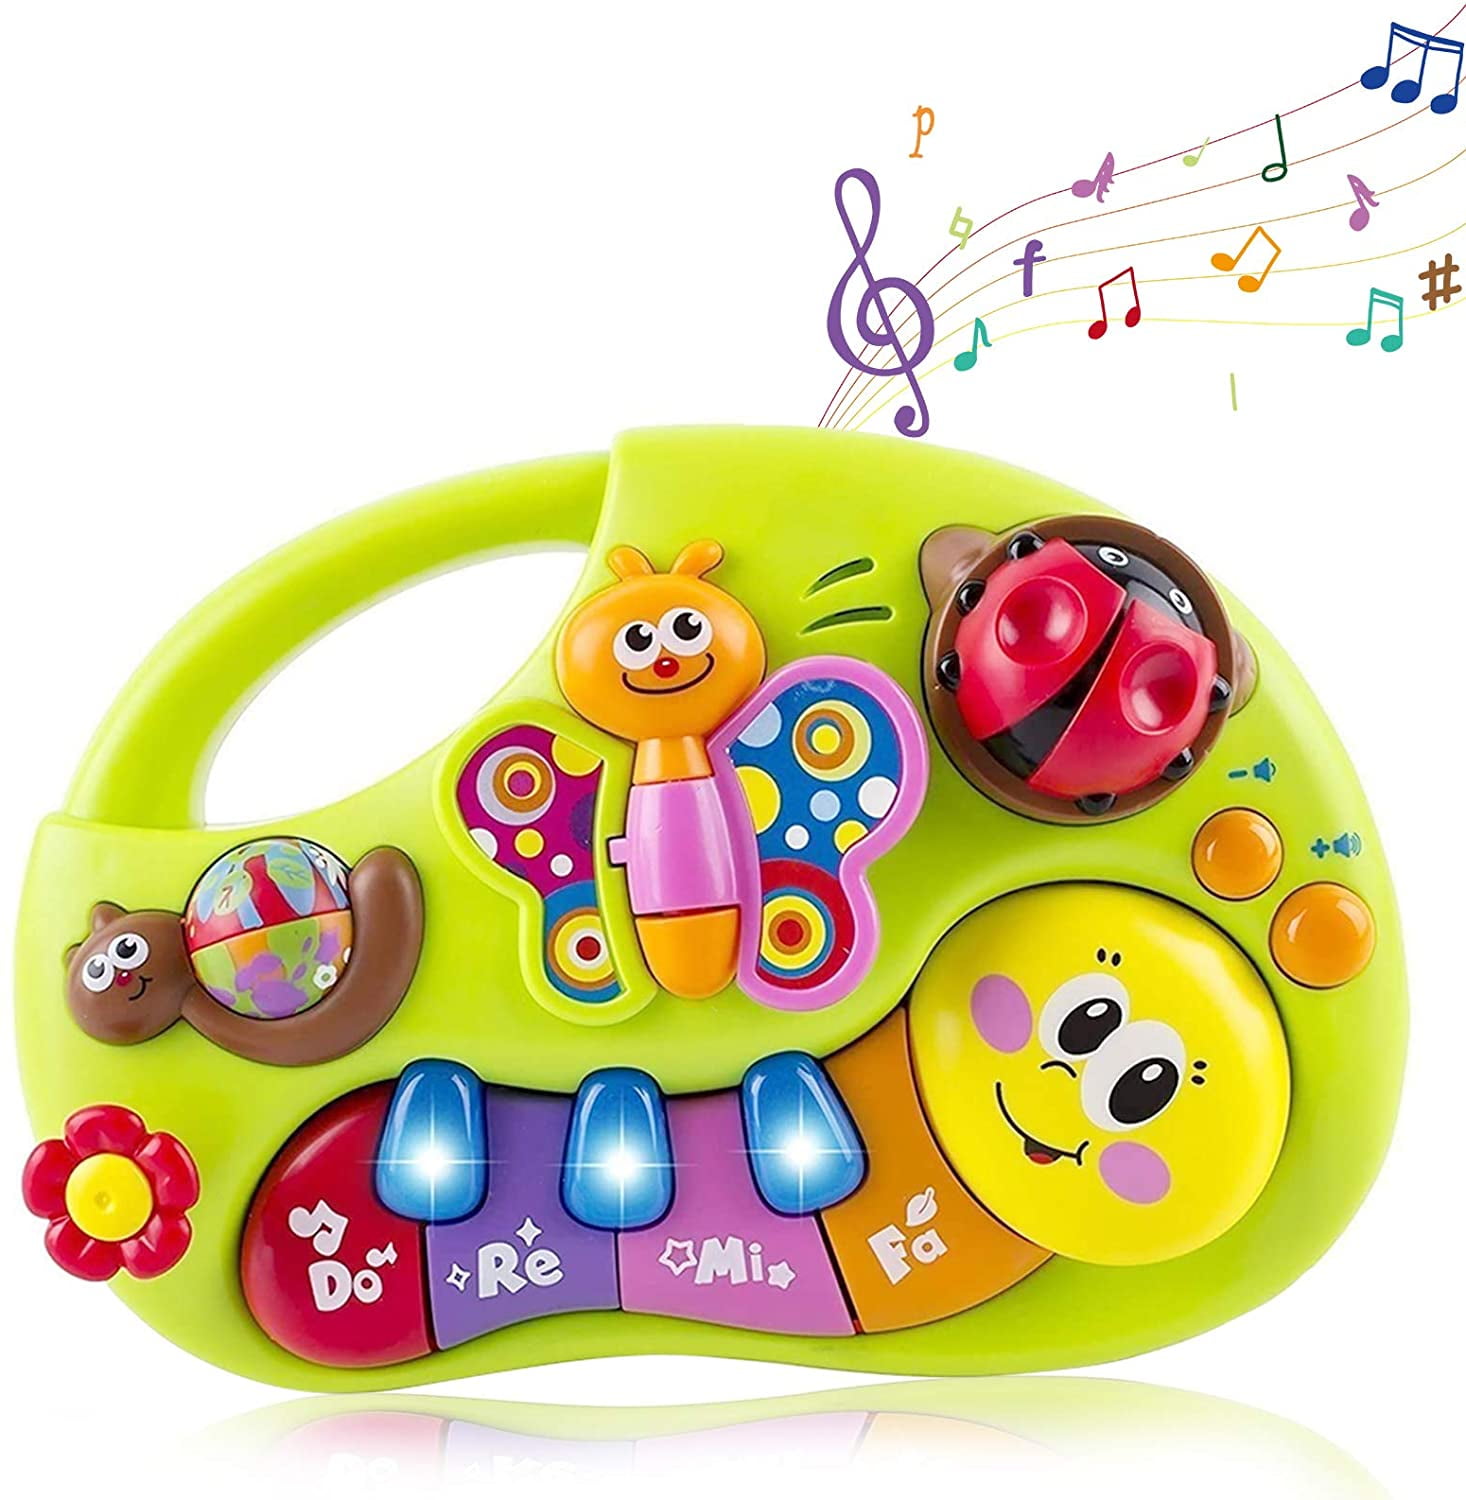 Hanmun Girls Toy Pop Snap Beads - Jewelry Marking Kit for Girls 5-7, 119 Pieces DIY Necklace Ring Bracelet Art Toddler Crafts, Ideal Christmas